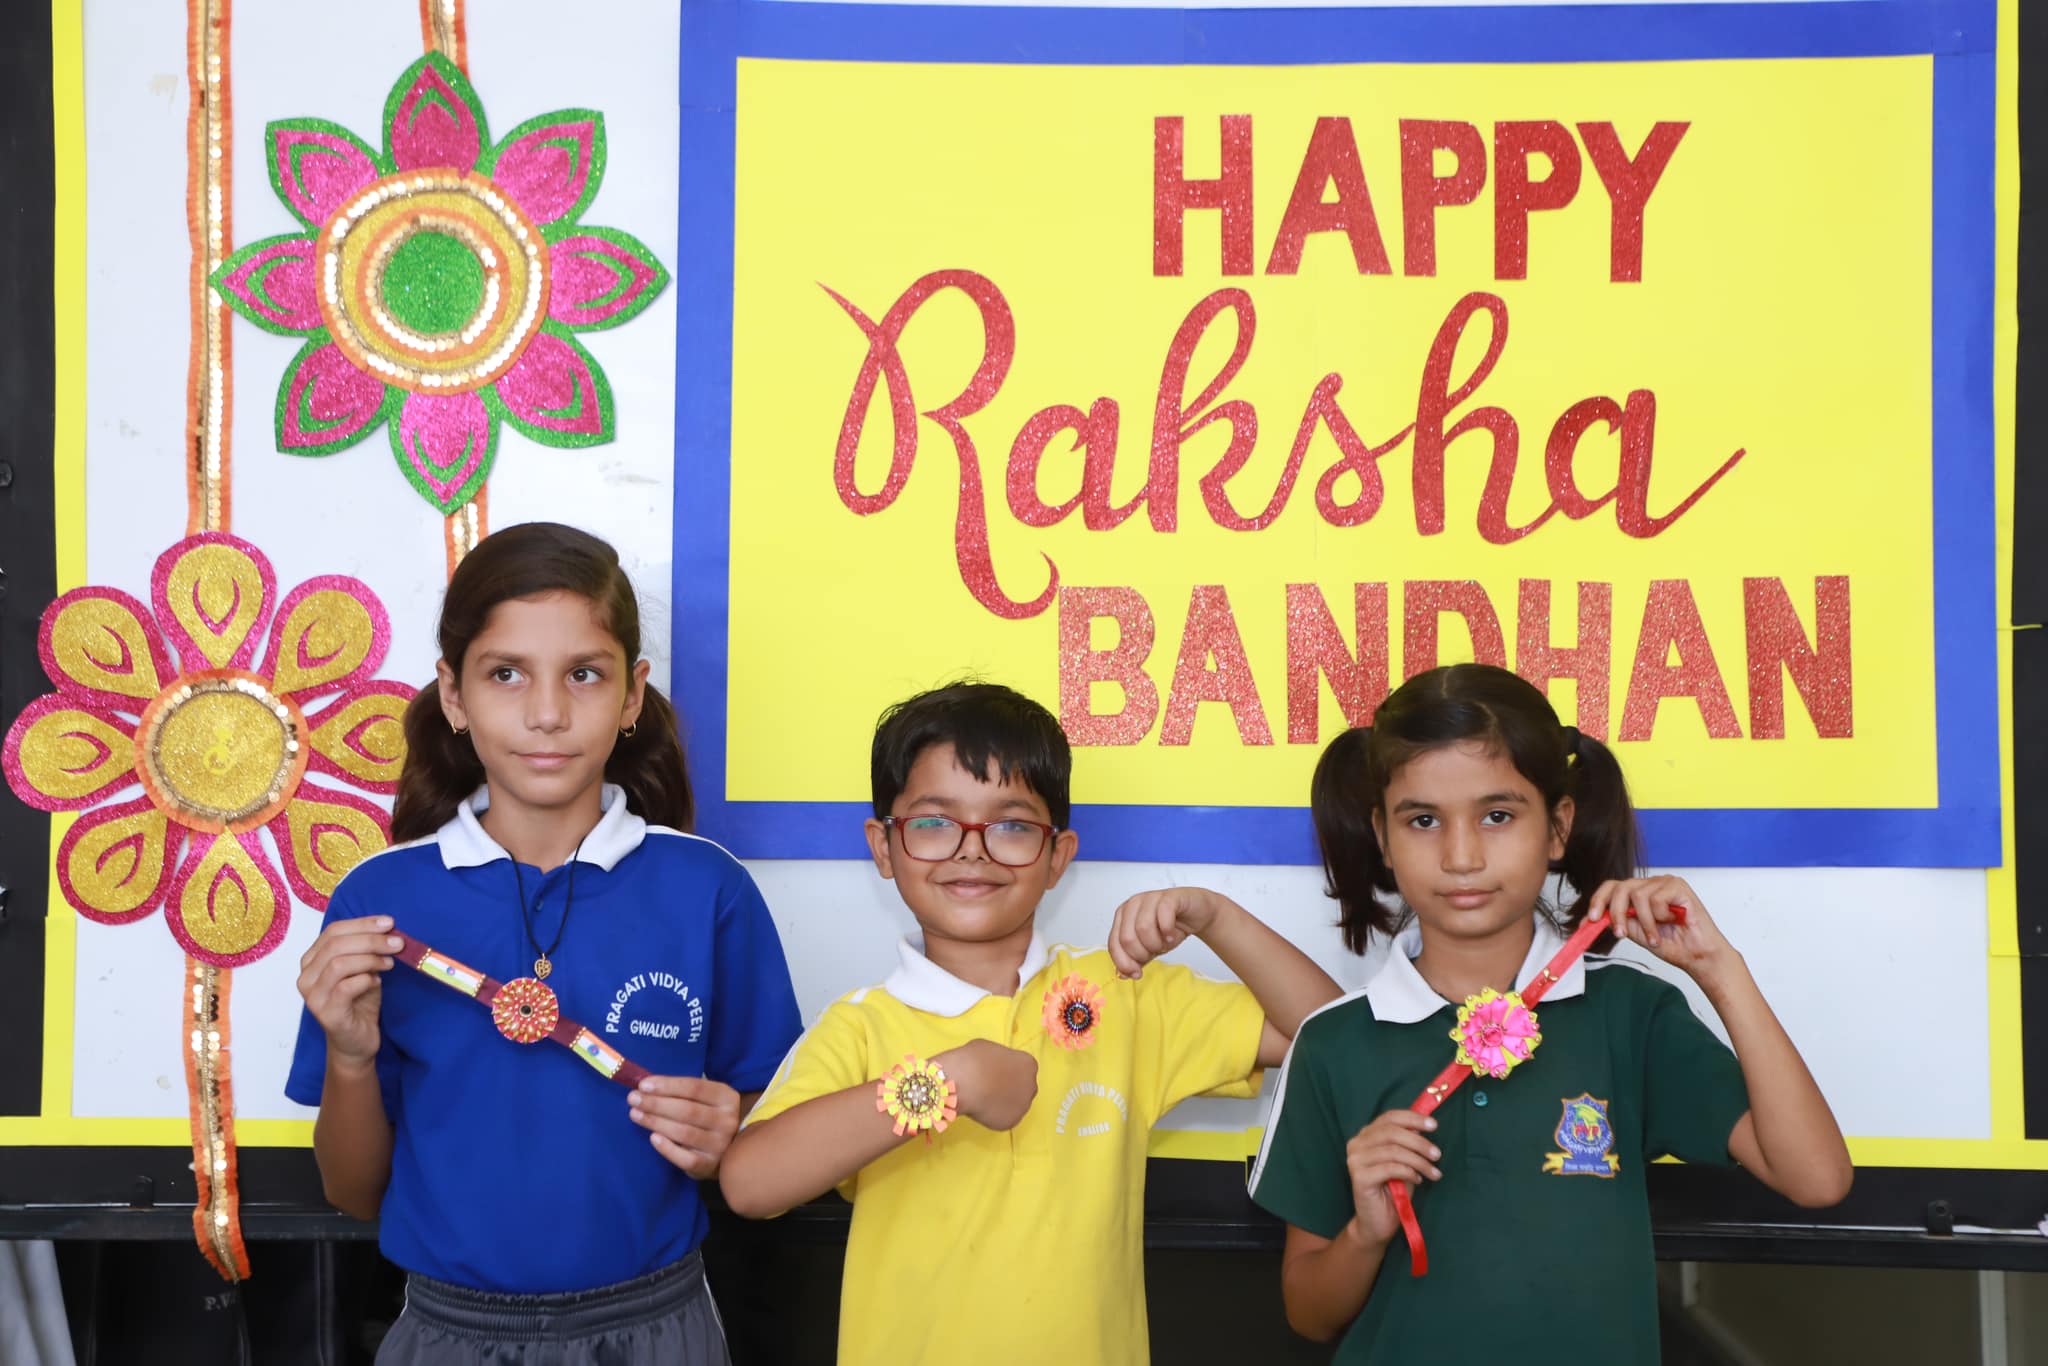 Glimpses of Rakhi celebration